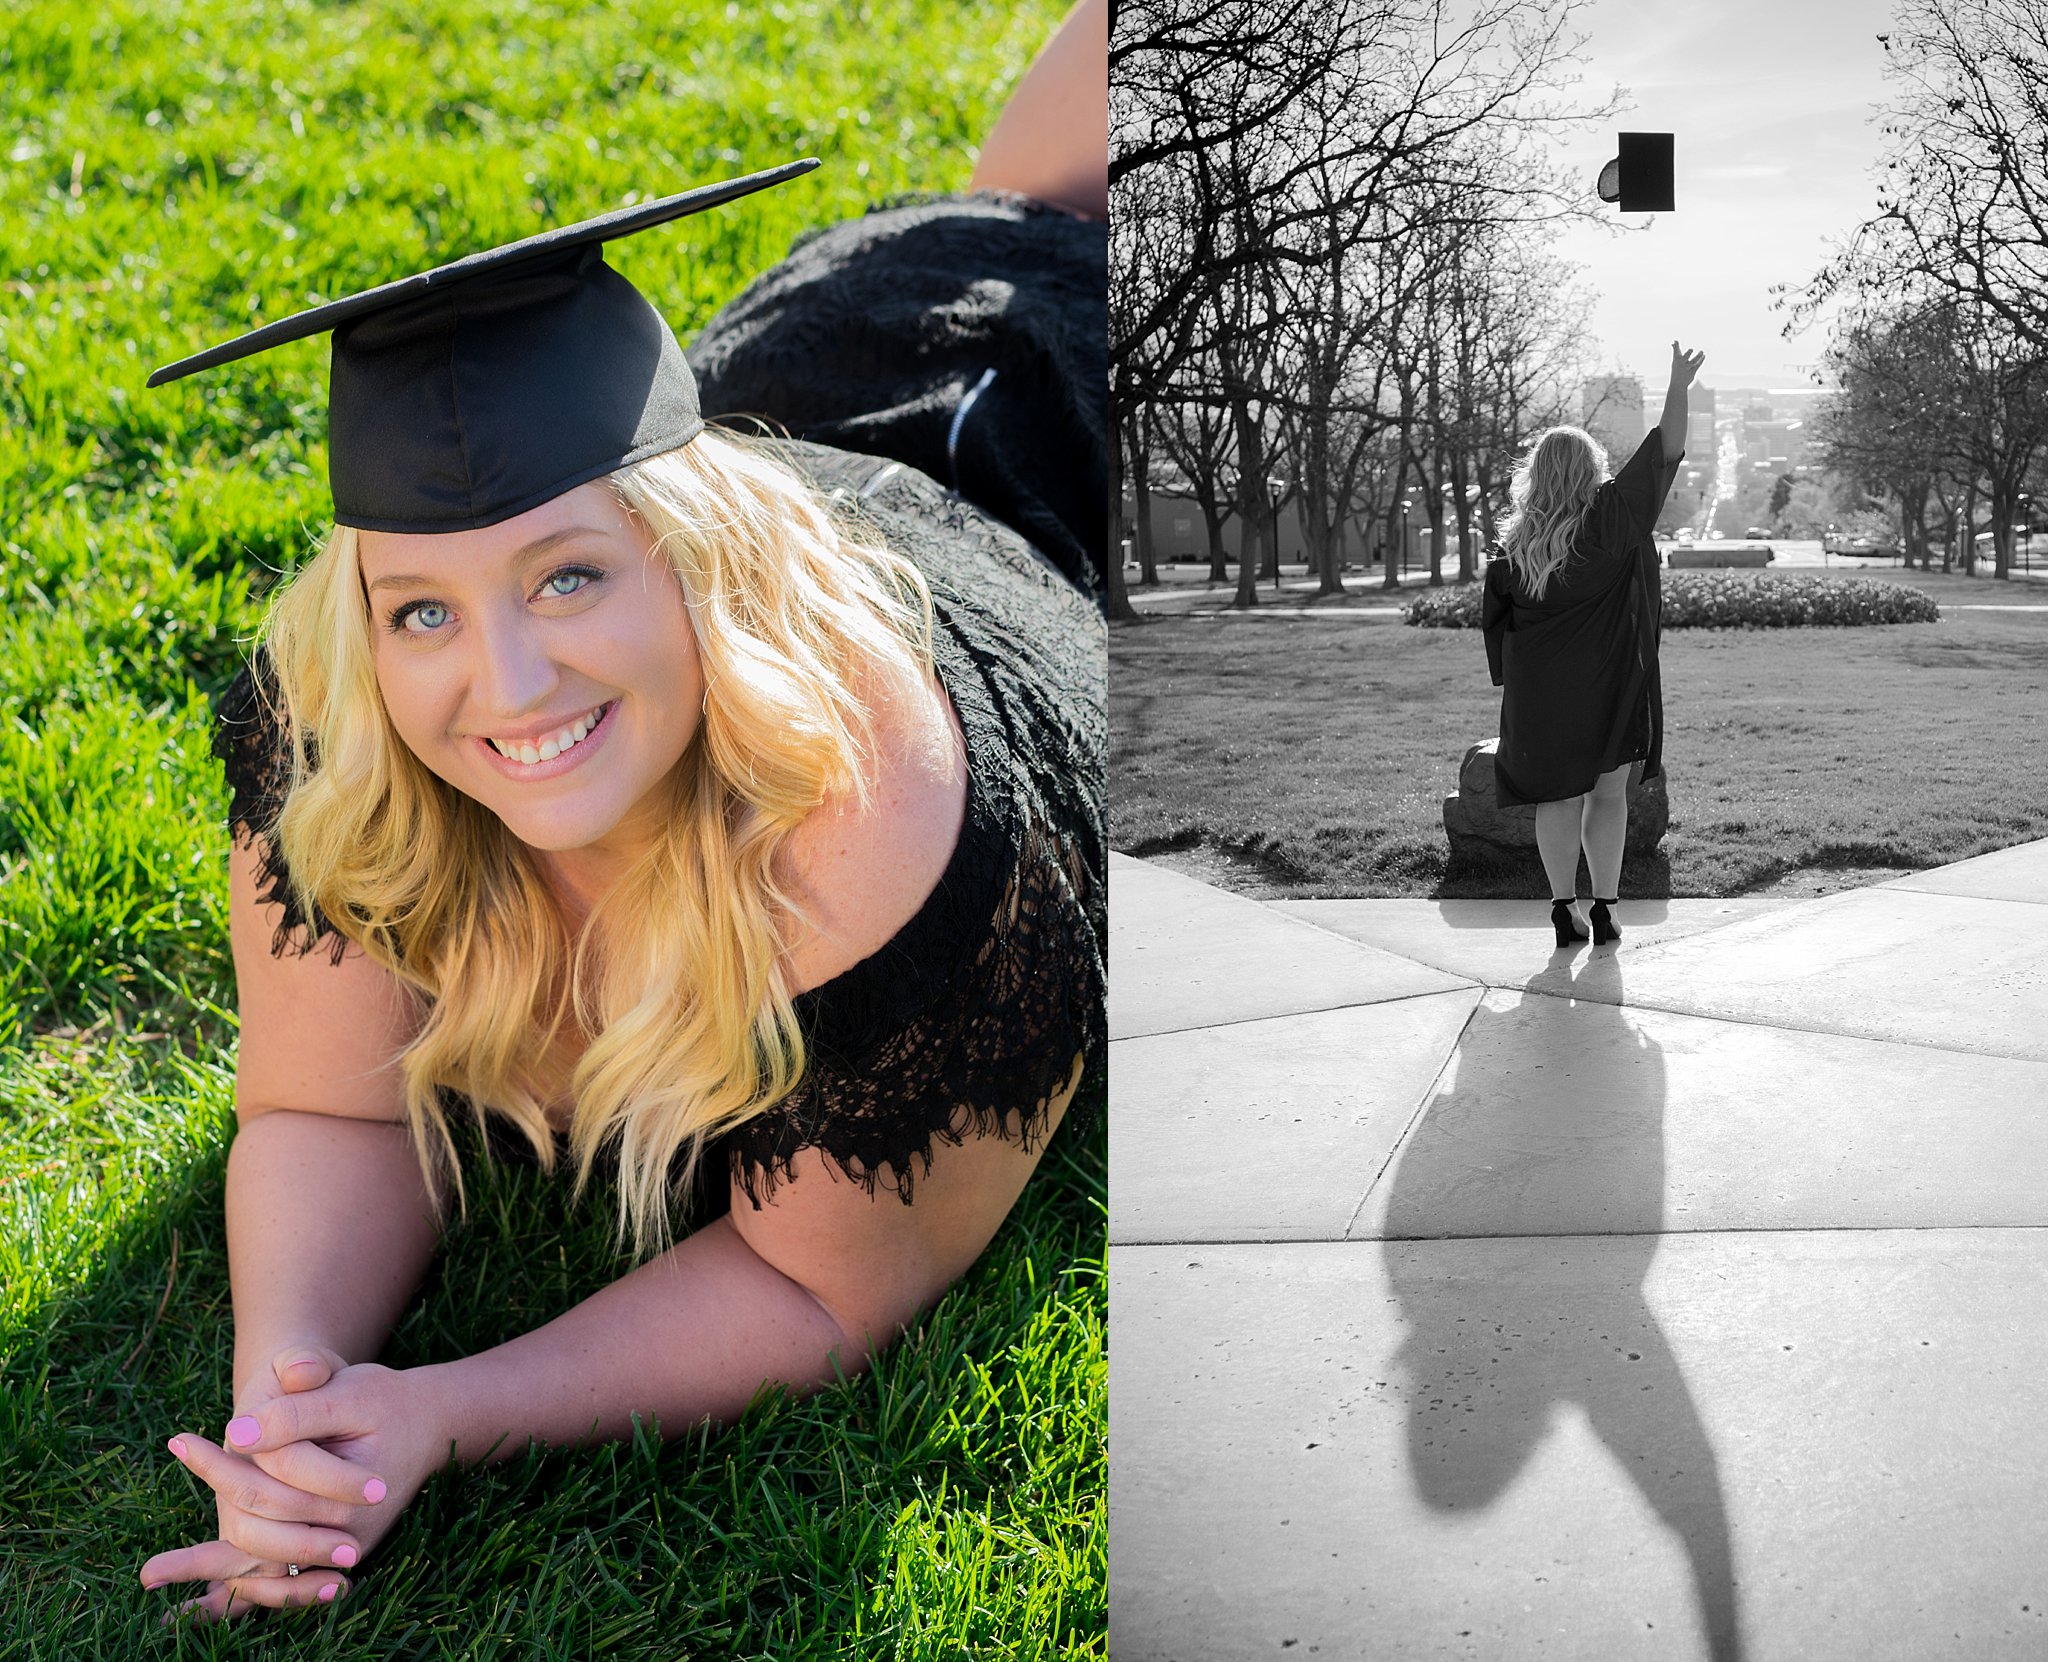 Salt Lake City,graduation photos,hilary gardiner photography,senior session,university of utah,